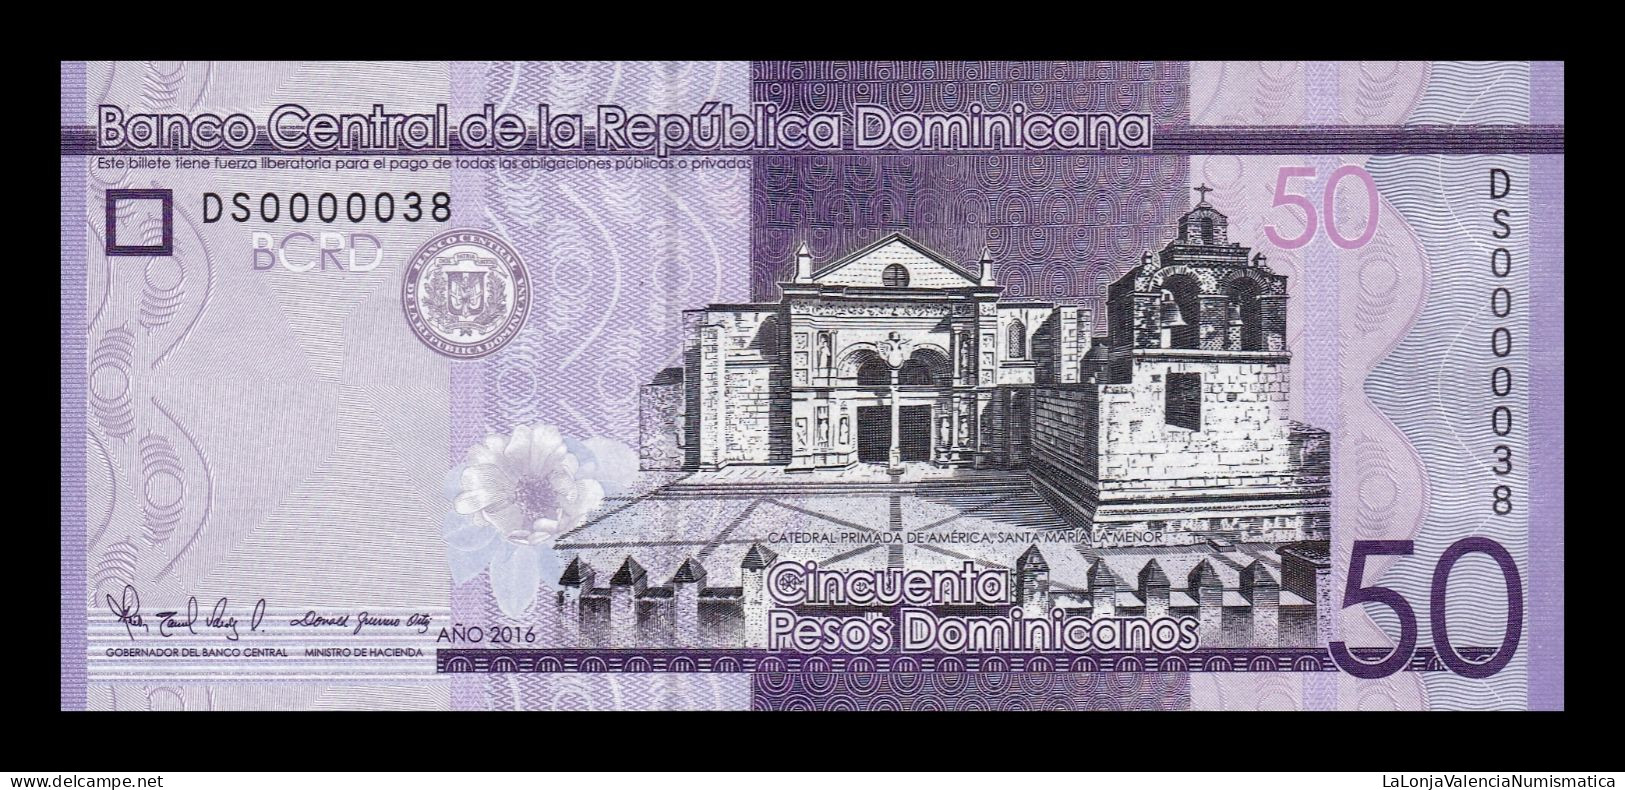 República Dominicana 50 Pesos Dominicanos 2016 Pick 189c Low Serial 38 Sc Unc - República Dominicana